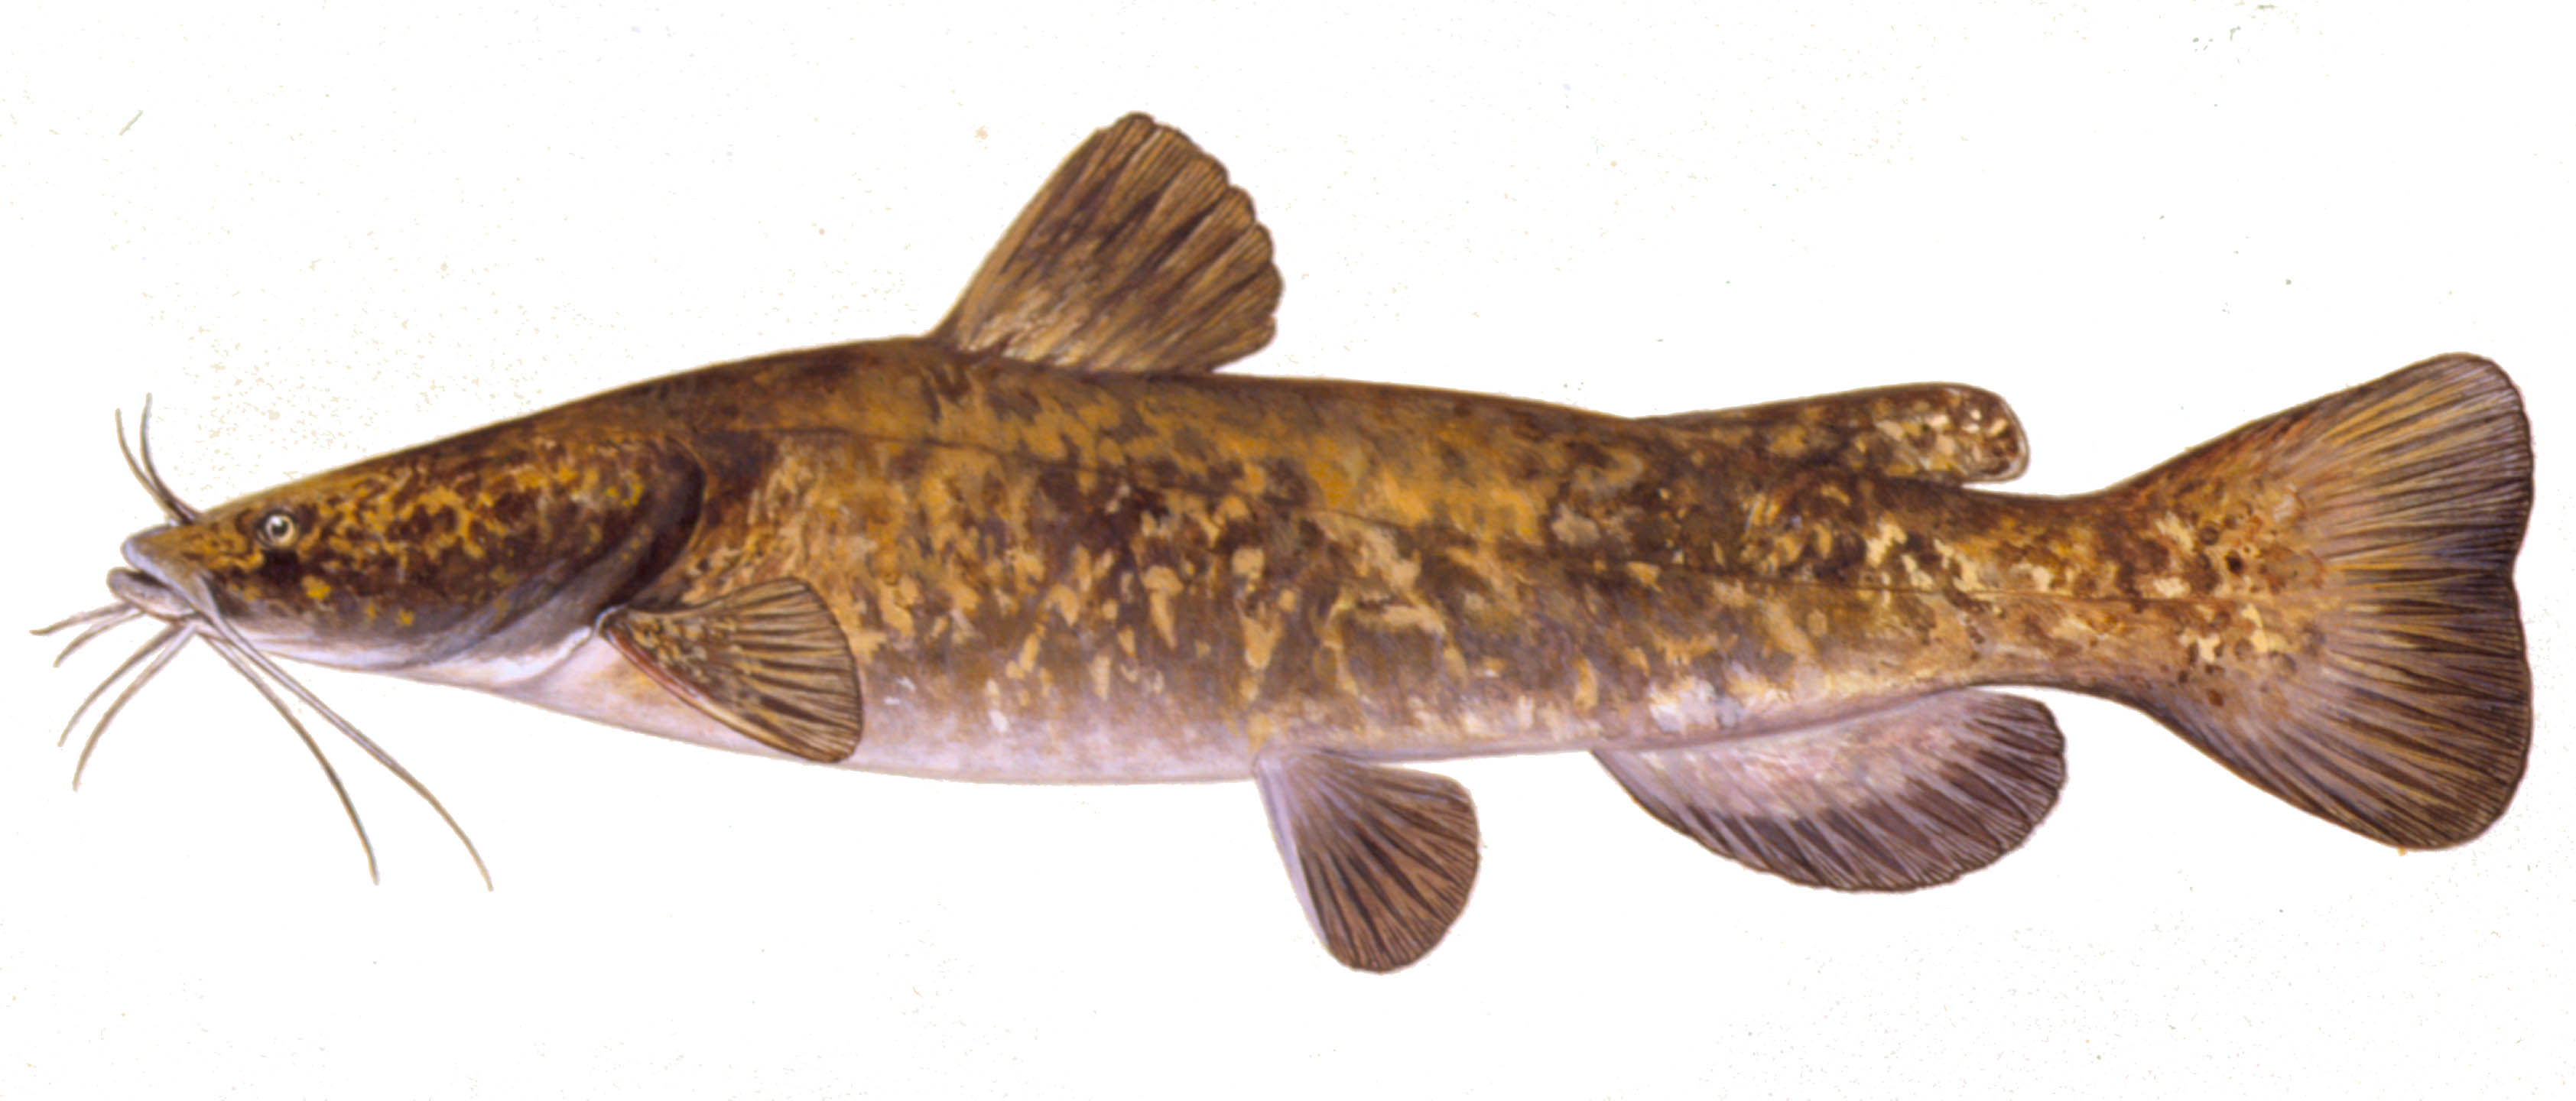 Catfish  Oregon Department of Fish & Wildlife